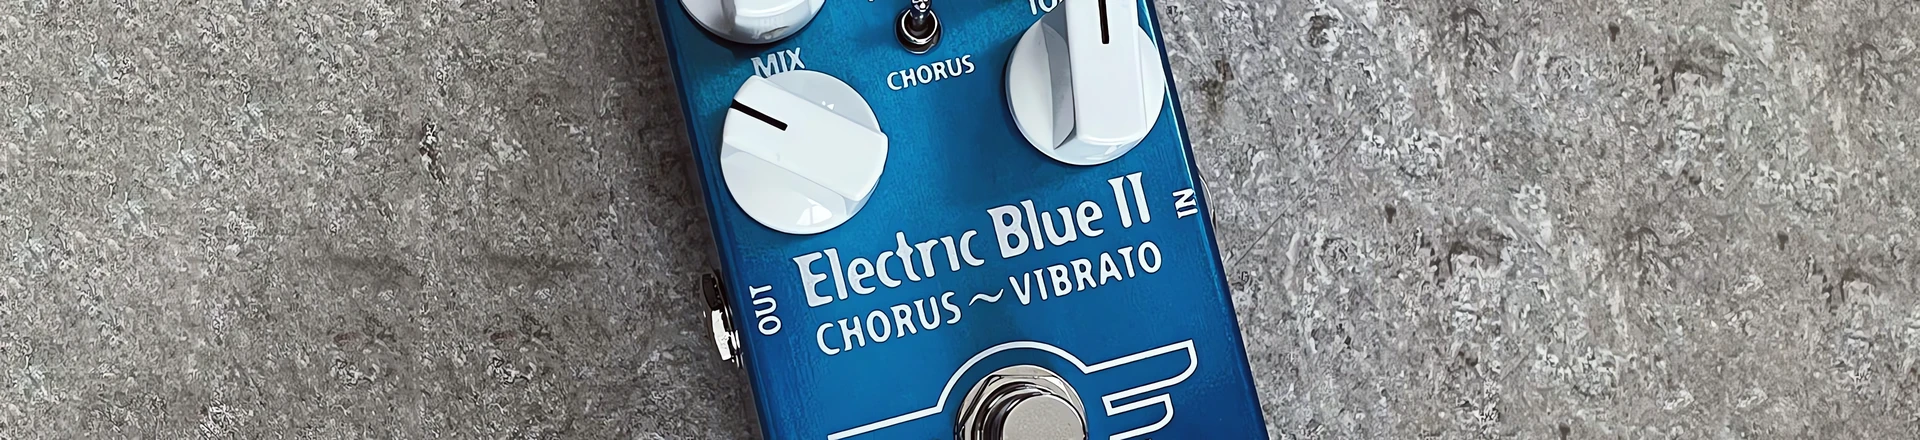 Electric Blue II Chorus Vibrato - Szalony Profesor prezentuje efekt typu 2w1